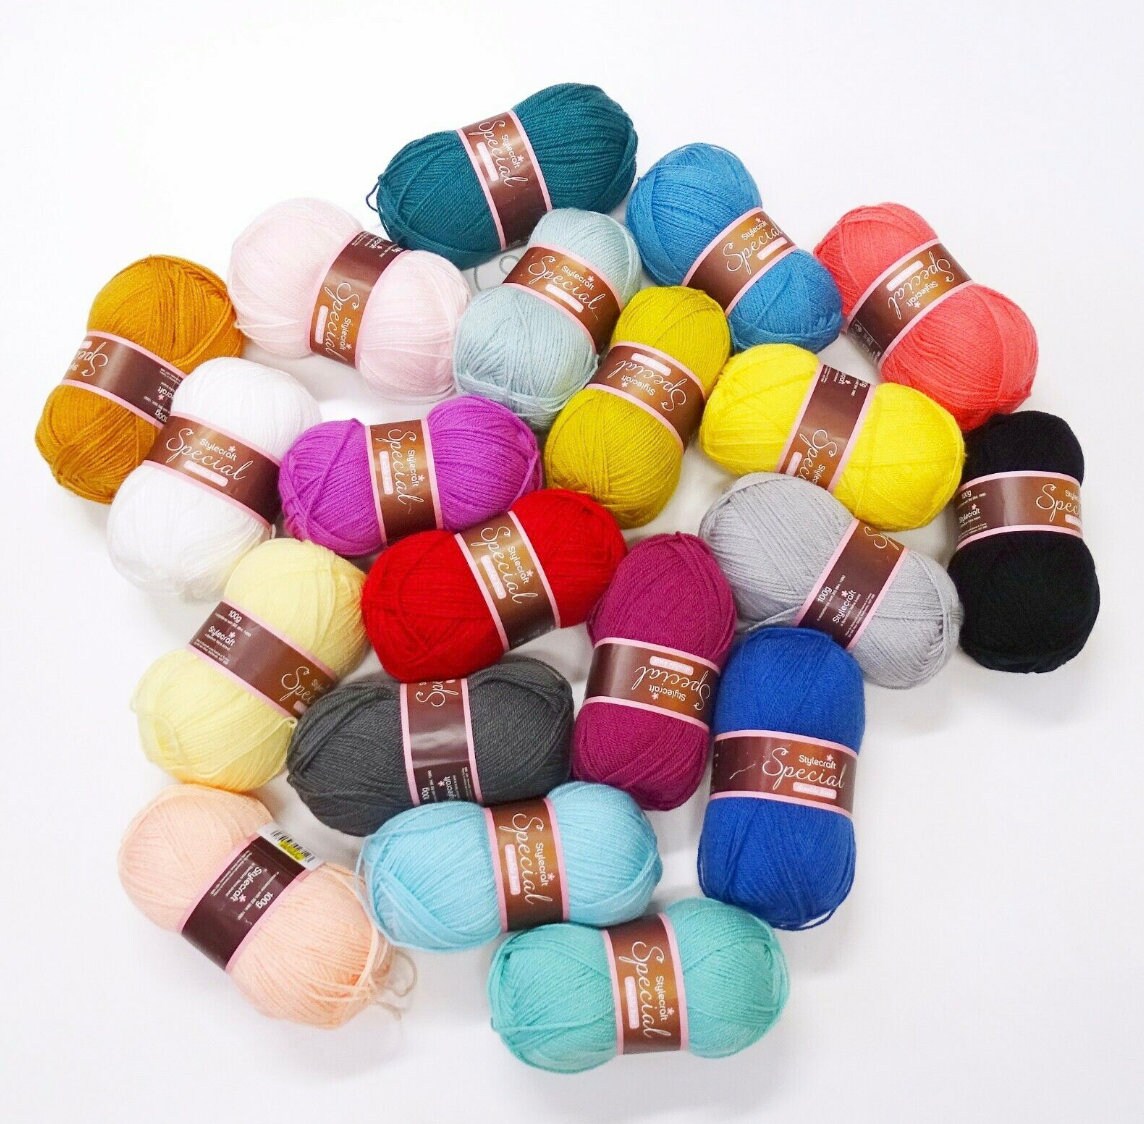  600g/1.32lb Hand Knitting Yarn Light Pink Soft Thick Arm  Knitting Yarn Blanket Yarn Chunky Chenille Yarn Knitting Materials